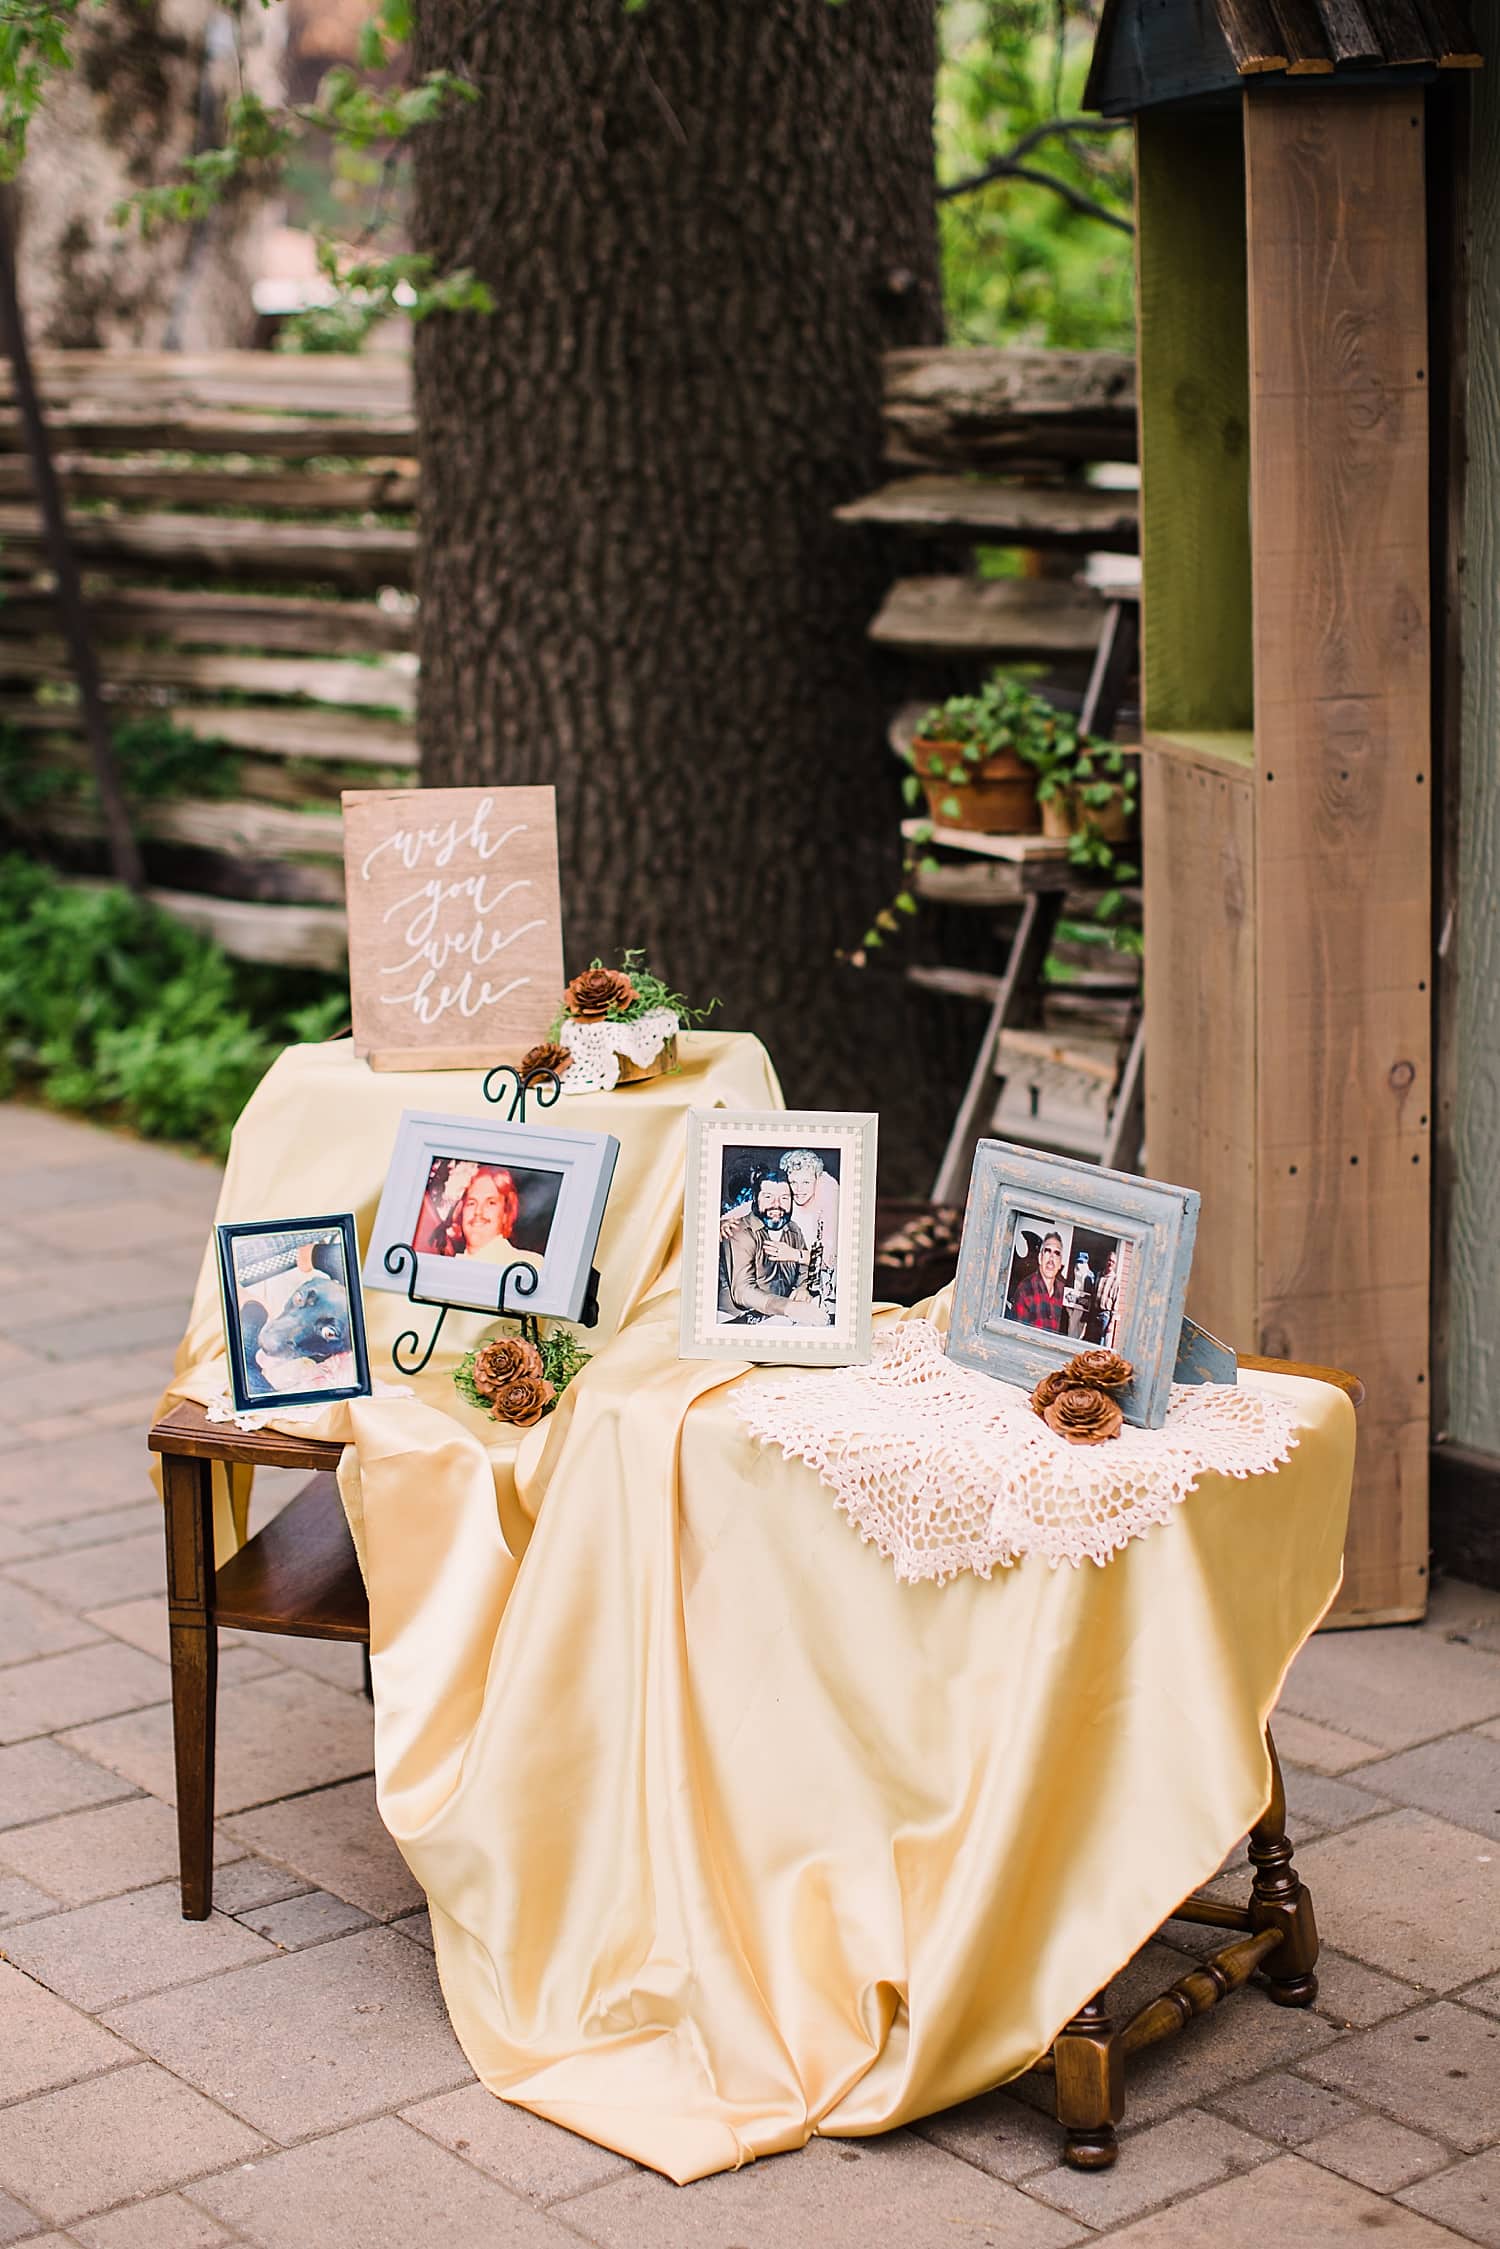 Memorial table at wedding